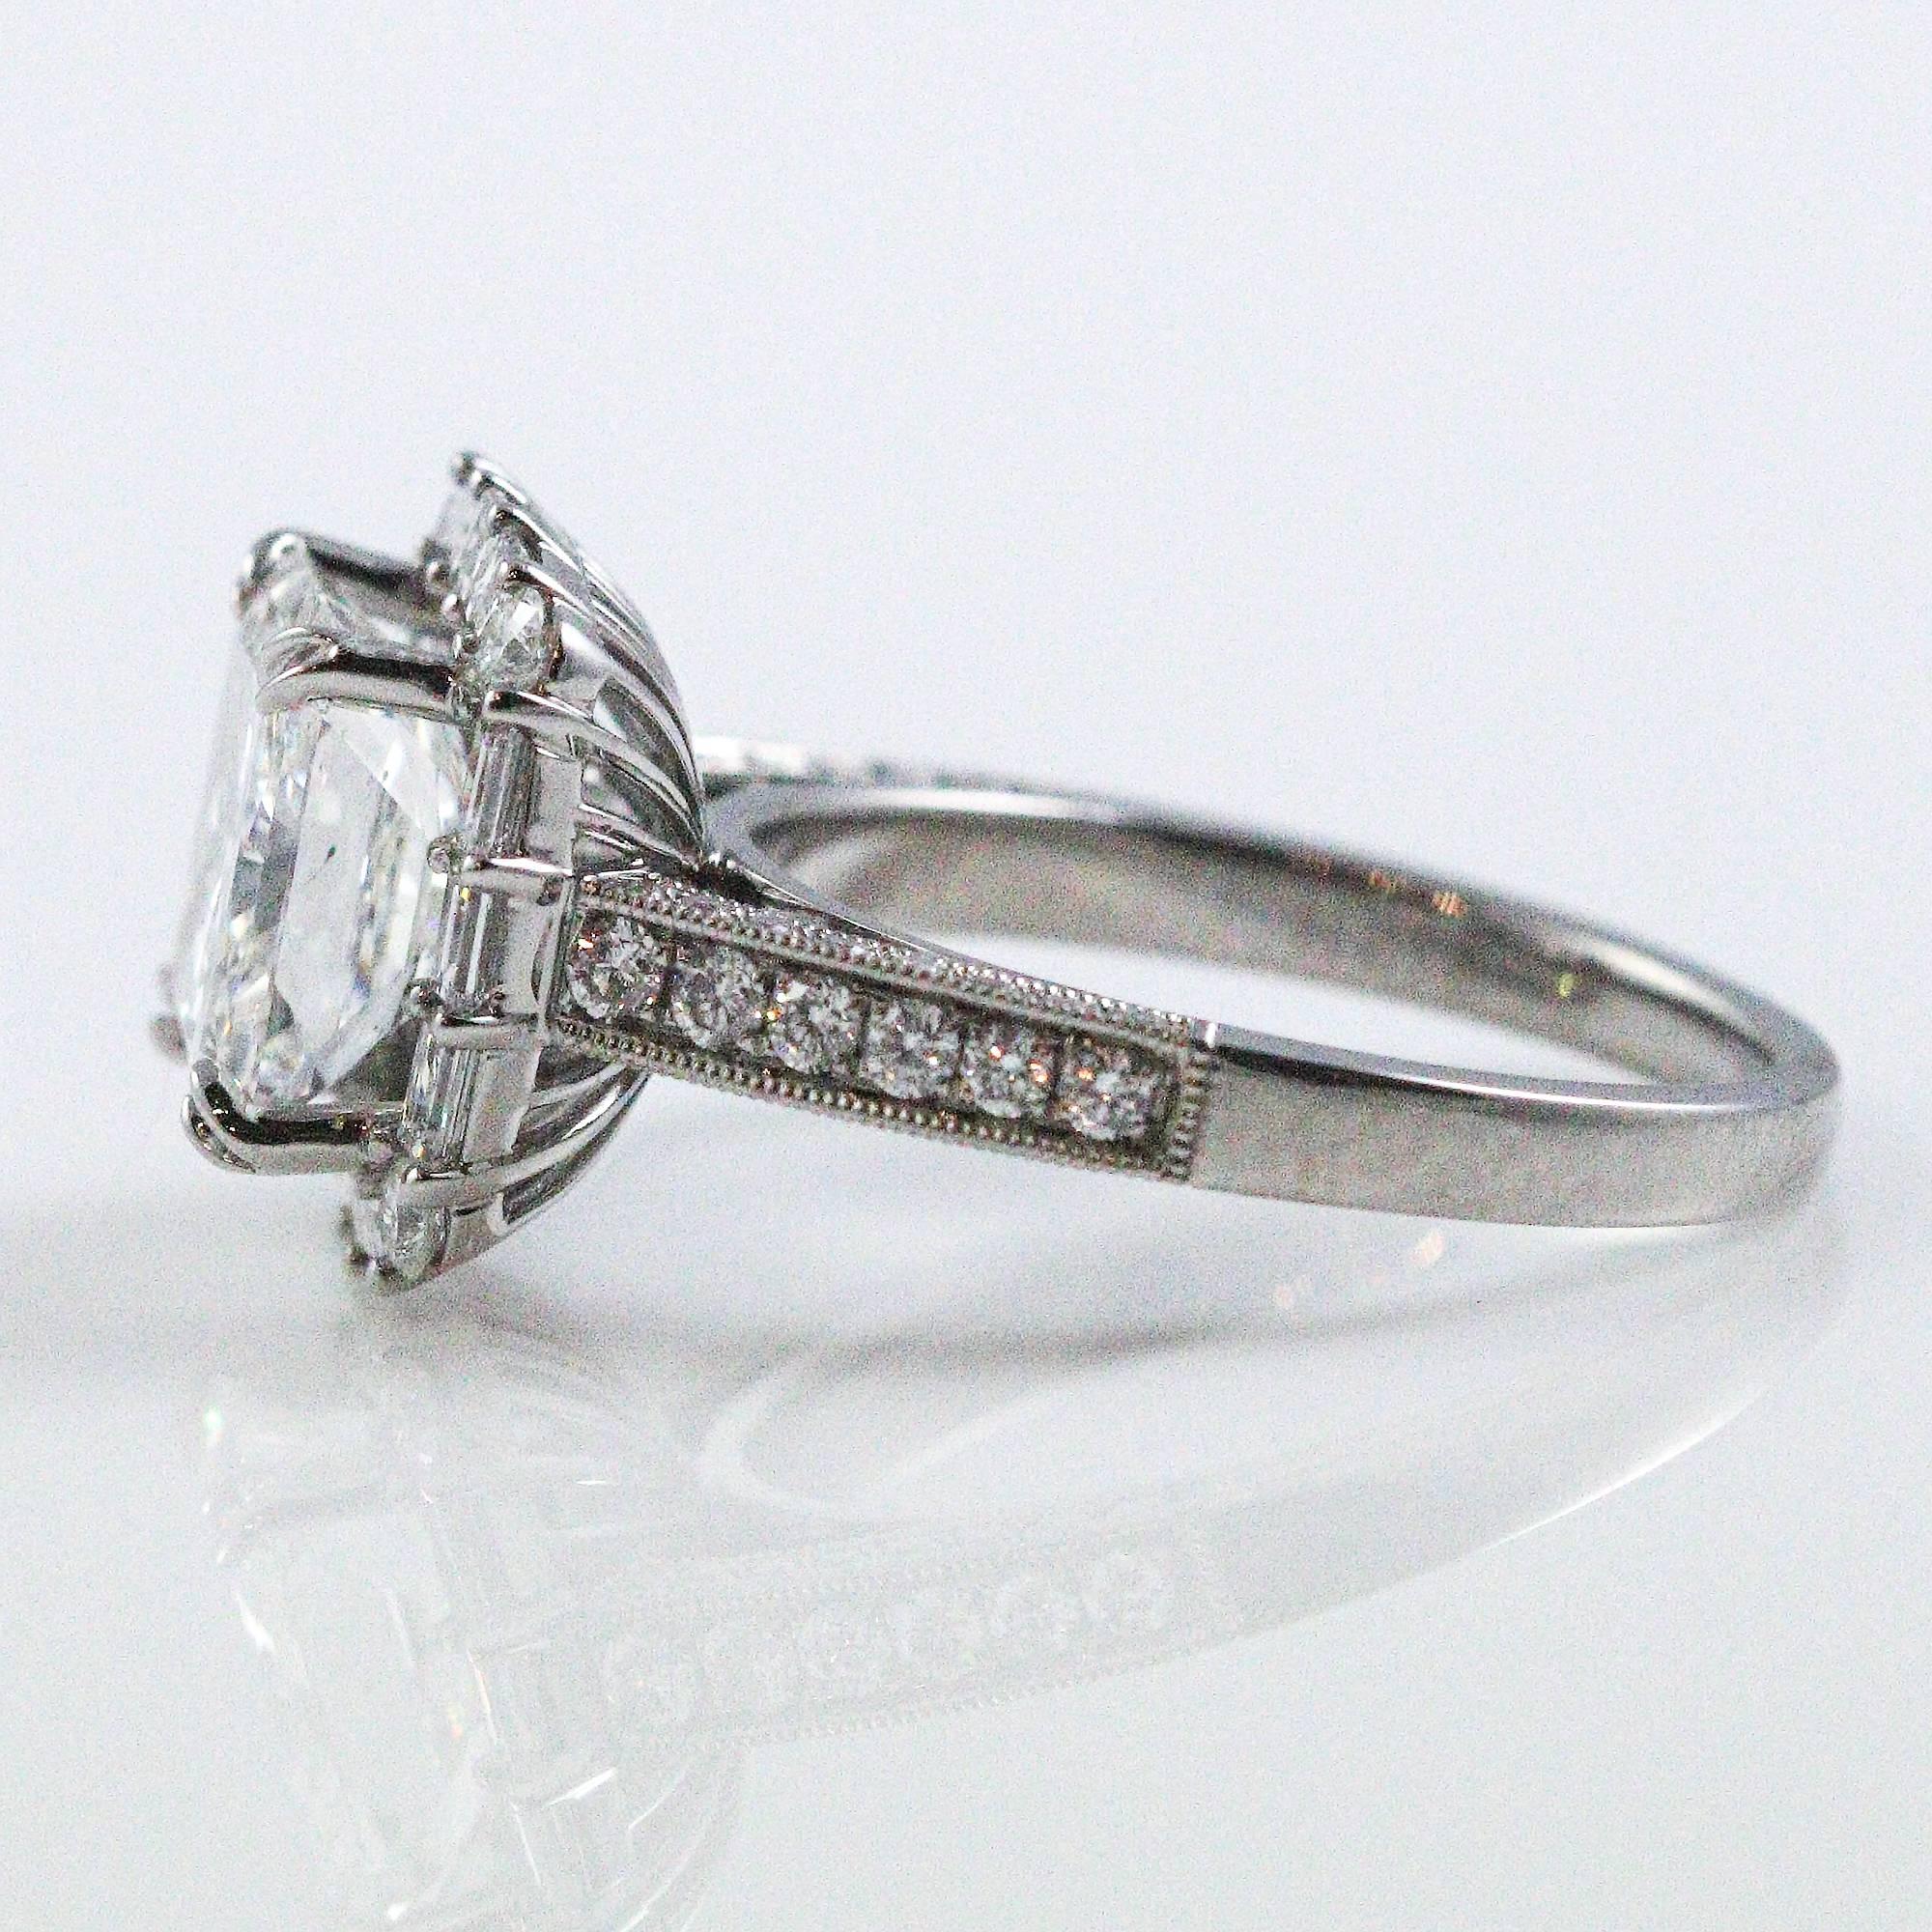 Women's 3.09 Carat Radiant Cut Diamond Halo Style Ring in 18 Karat White Gold